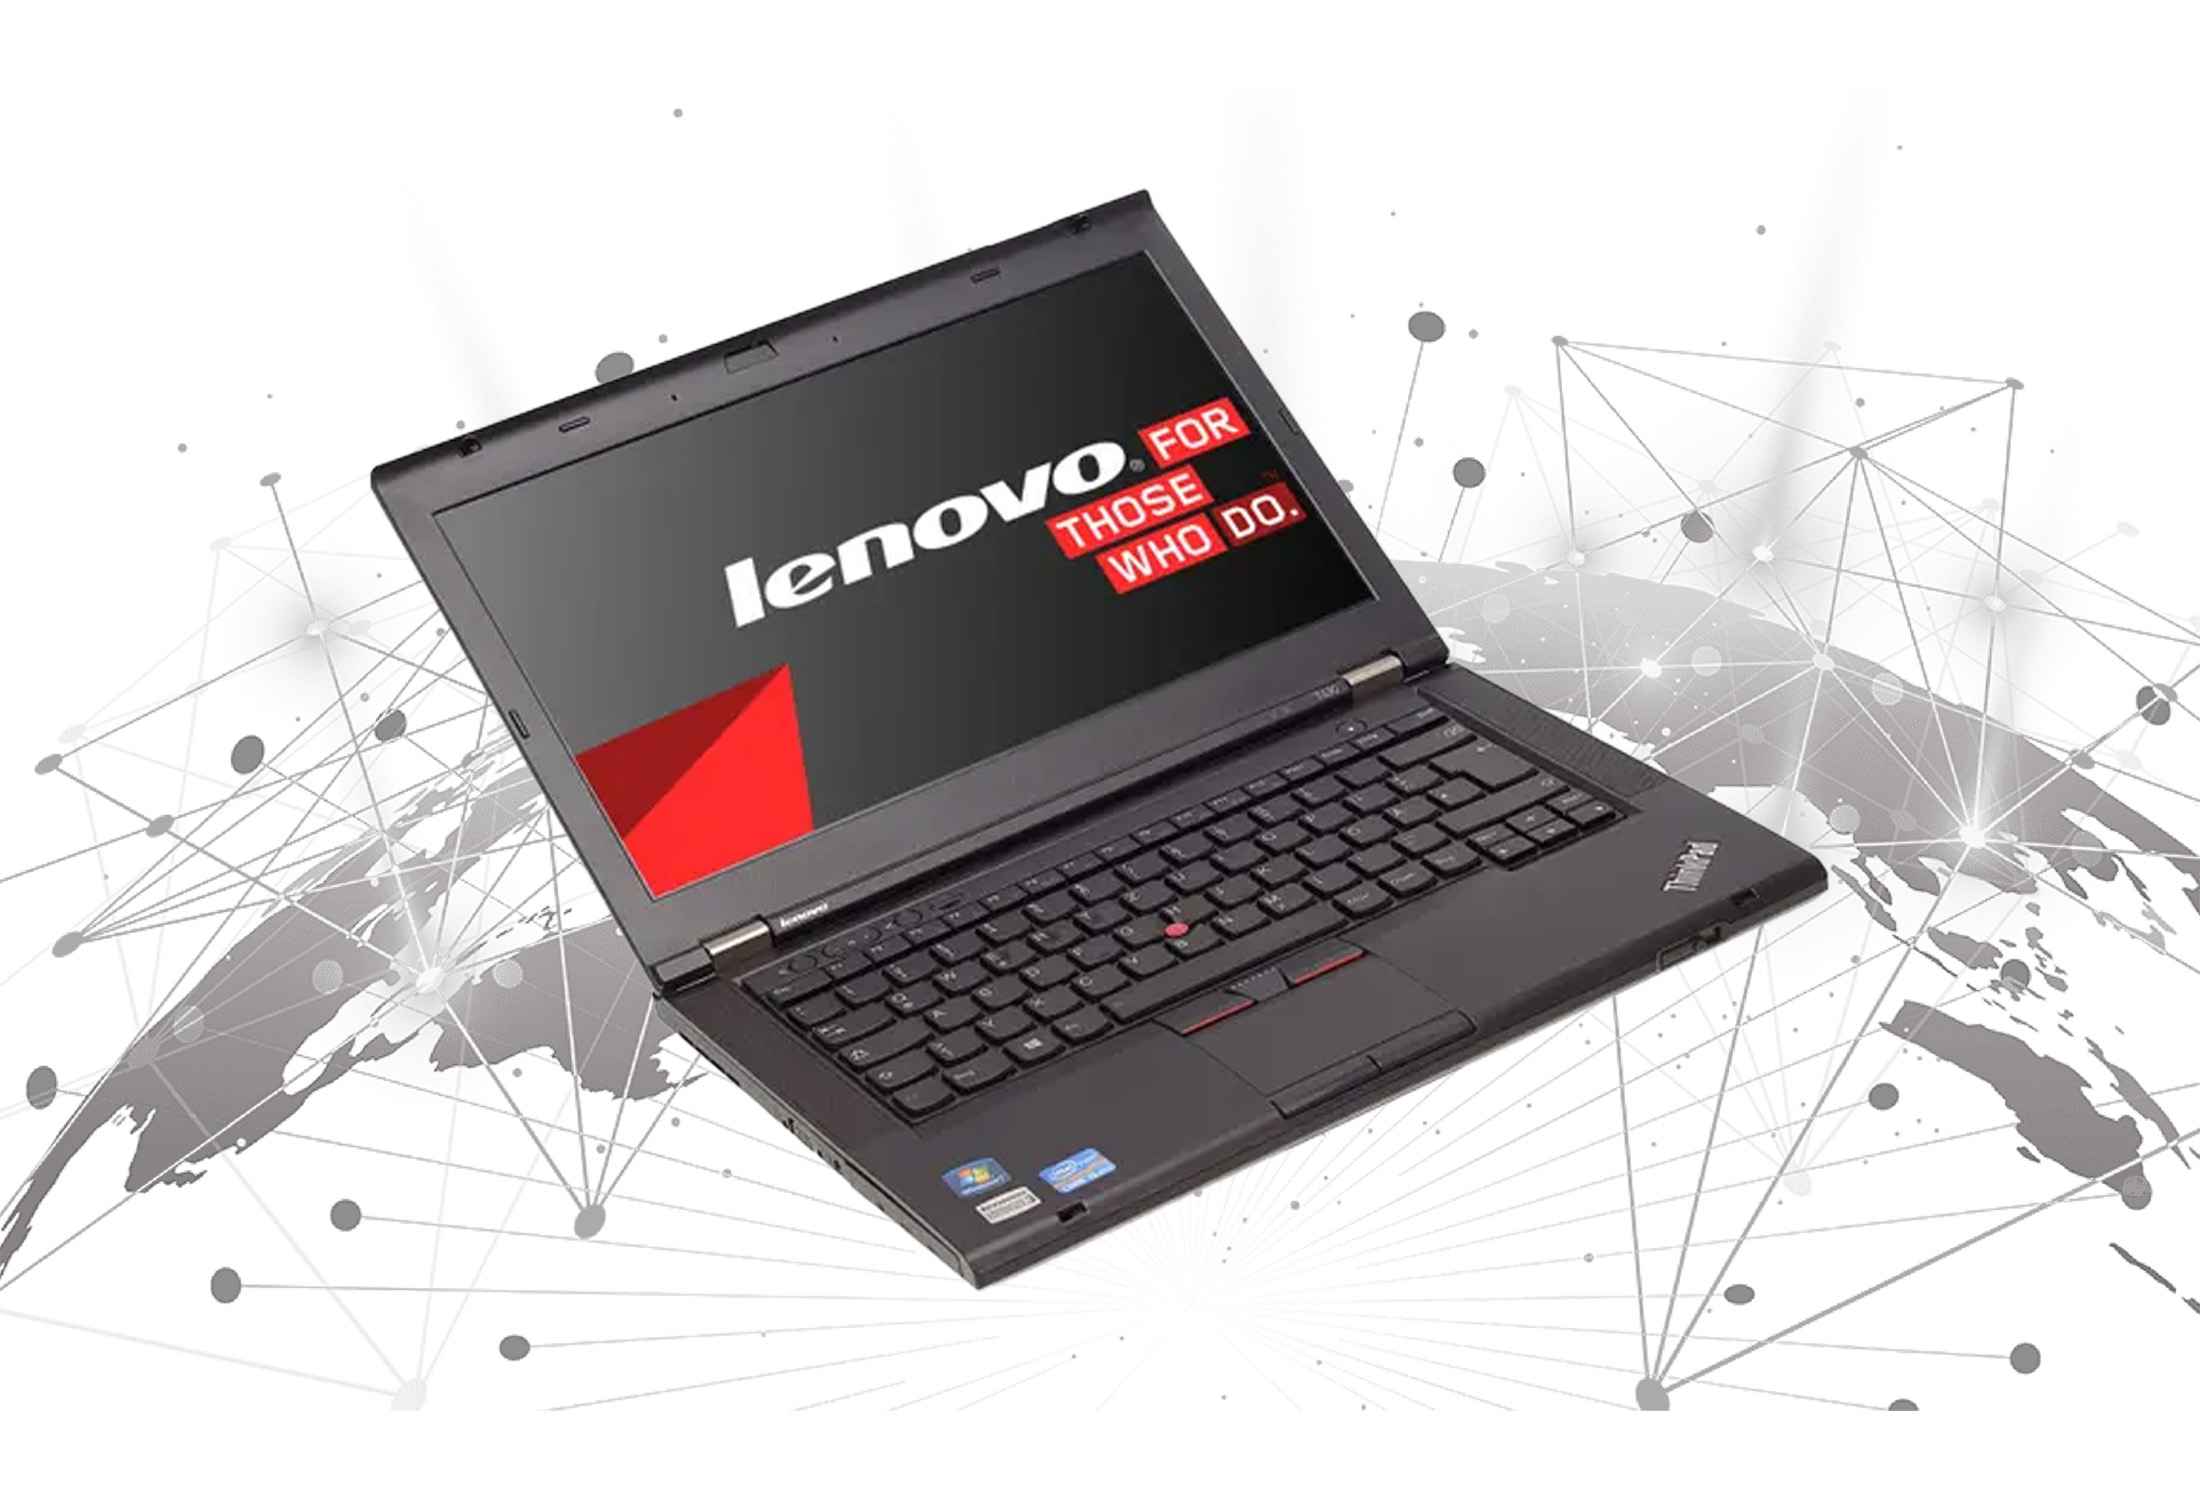 Lenovo Thinkpad T430 Core i5-3320M Intel HD Graphics 4000 SSD Camera Status A